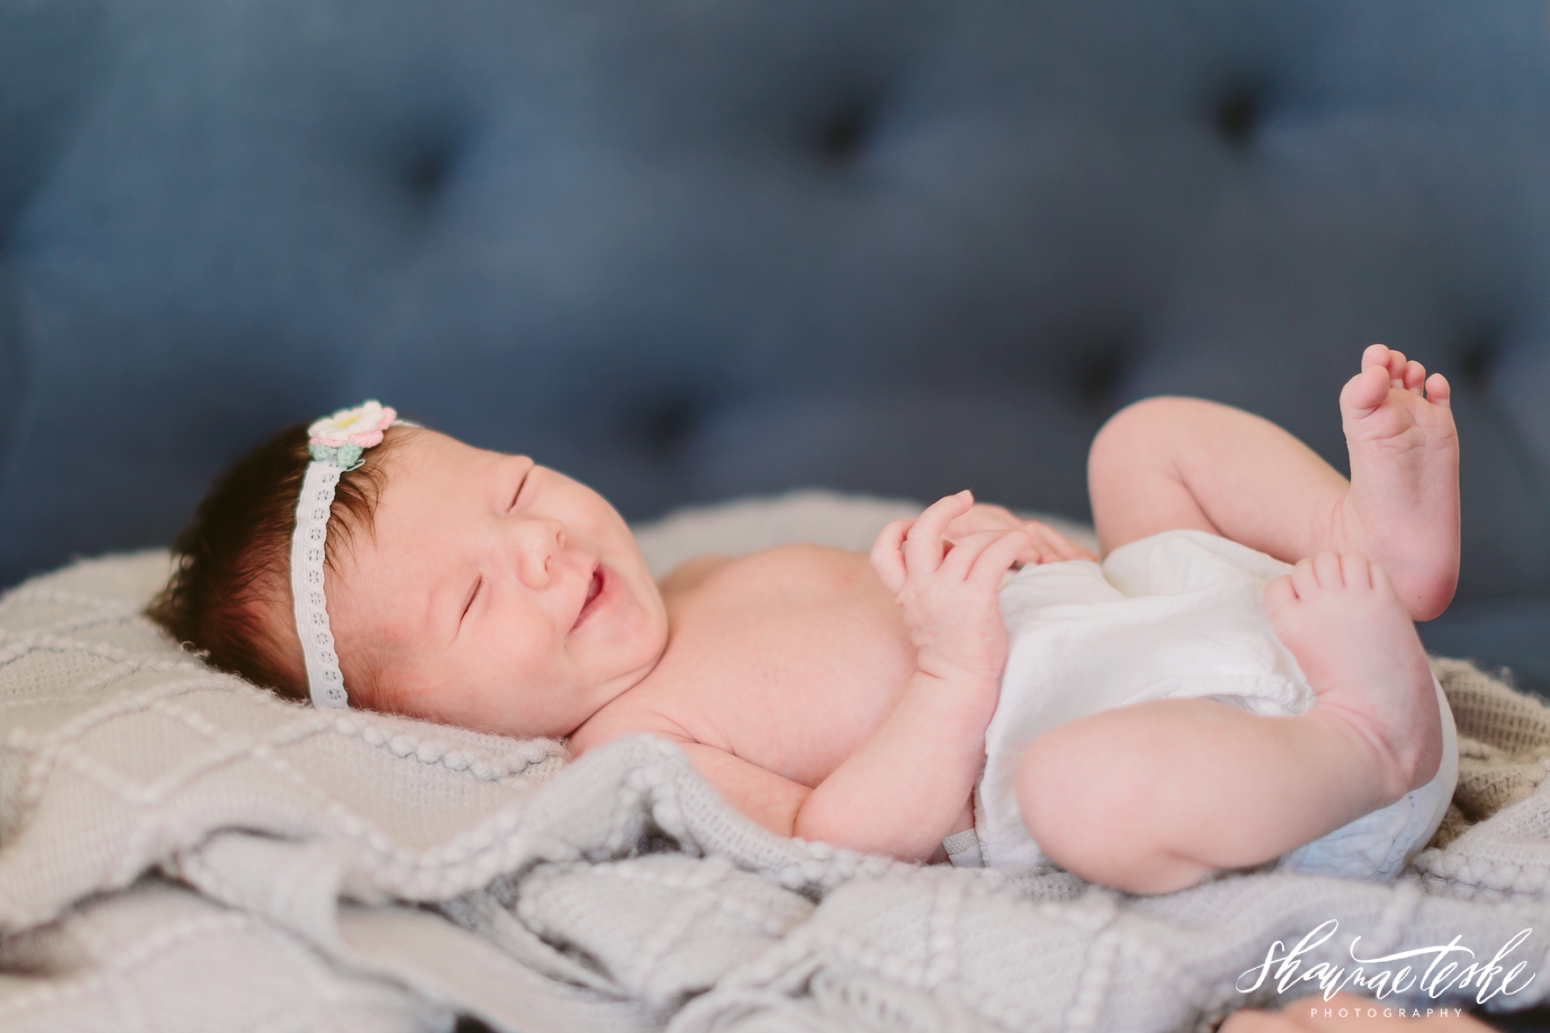 shaunae_teske_wisconsin_photographer_at-home-newborn-session-wisconsin-kathryn-37